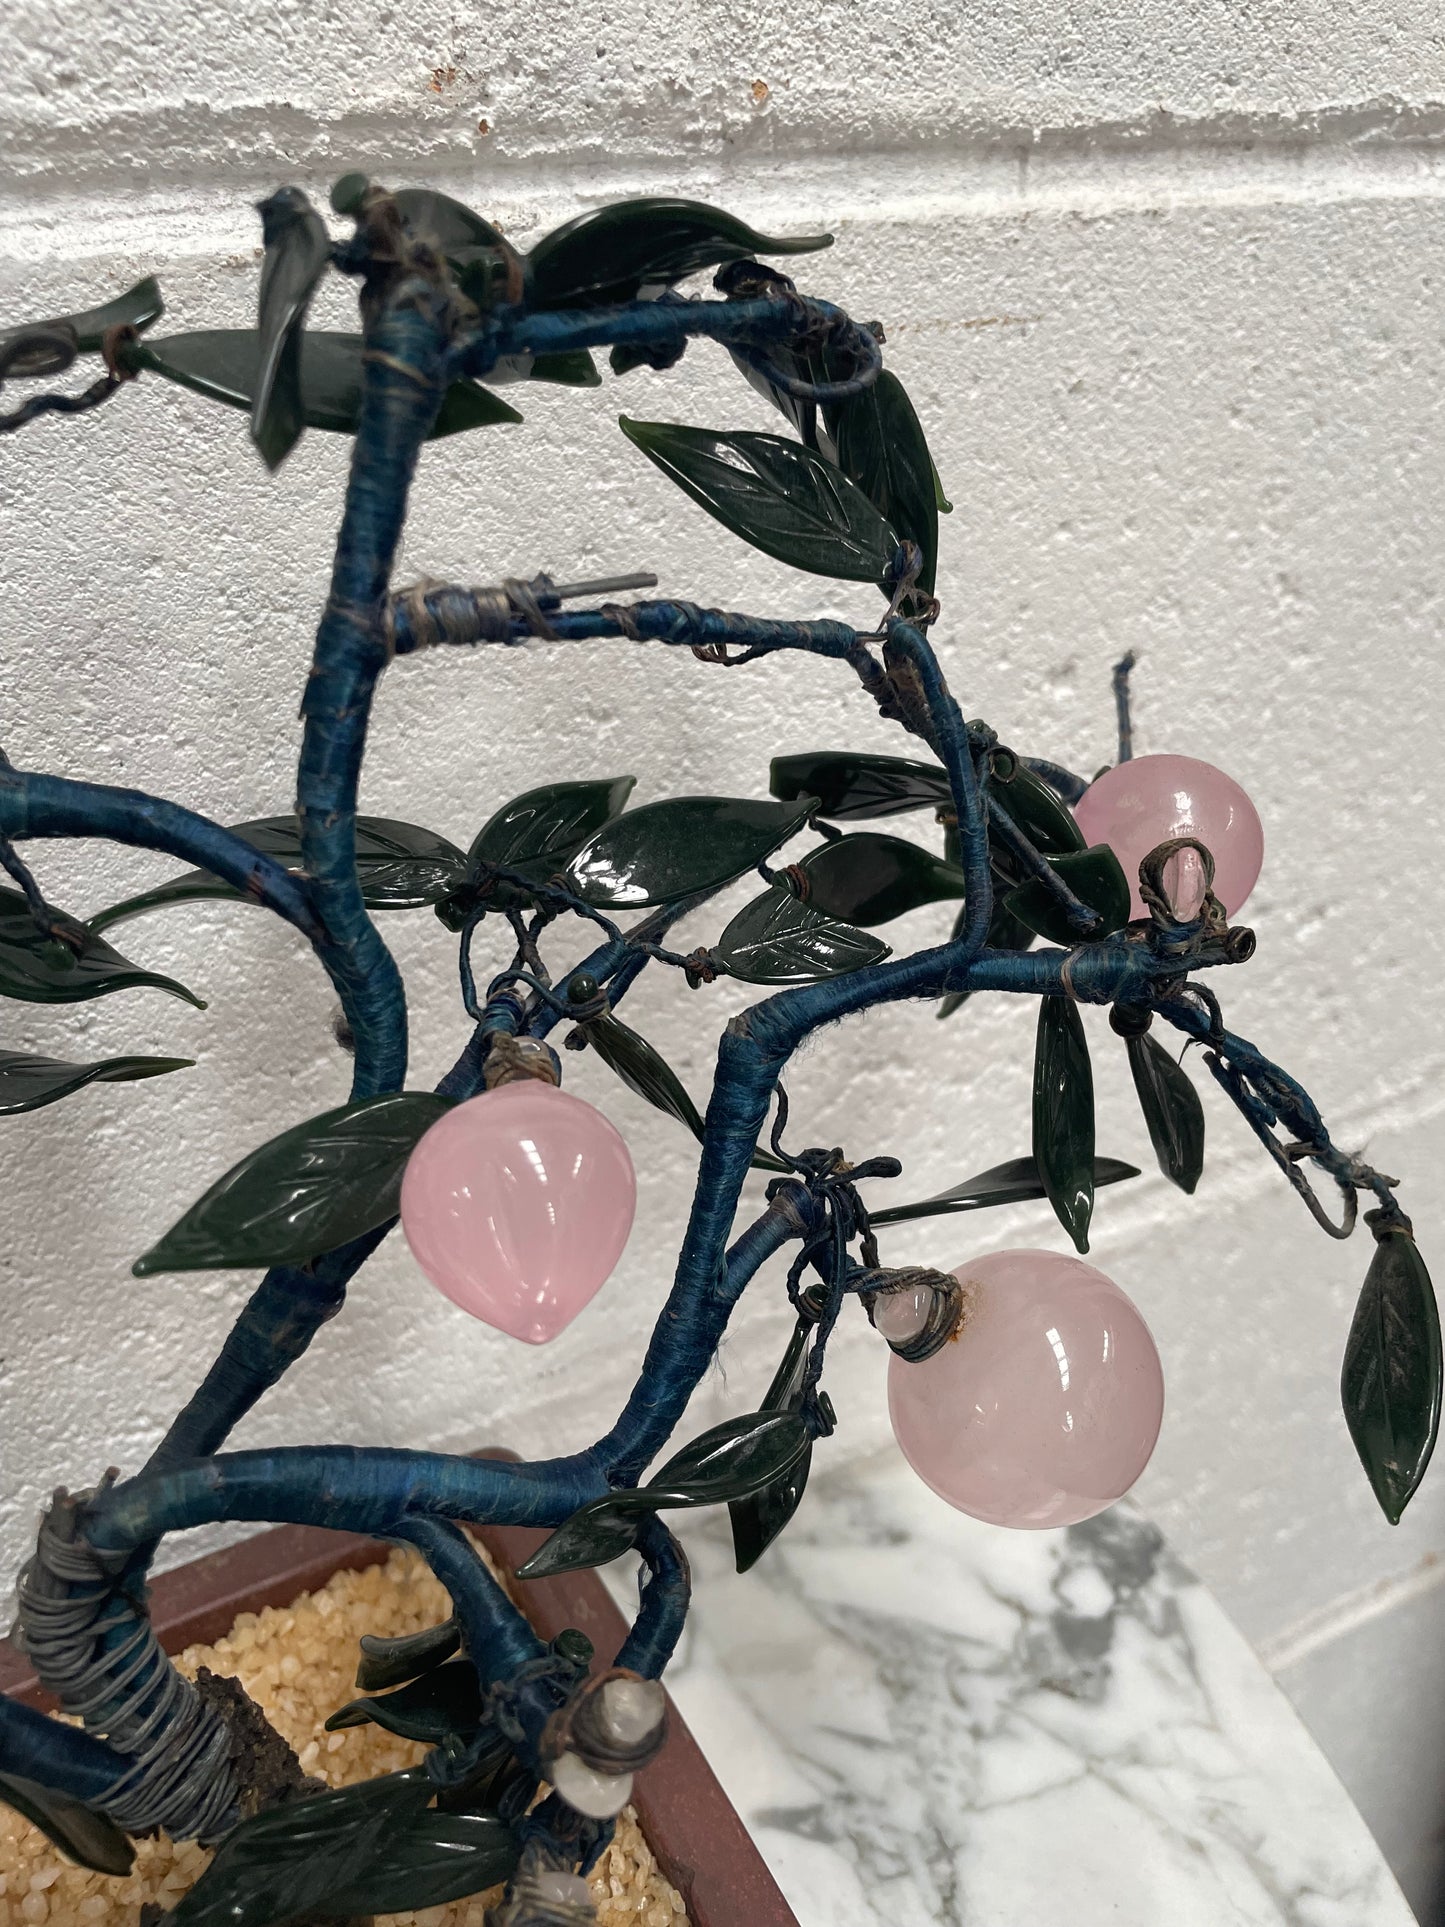 Vintage Glass Cherry Blossom Bonsai Tree in Pot